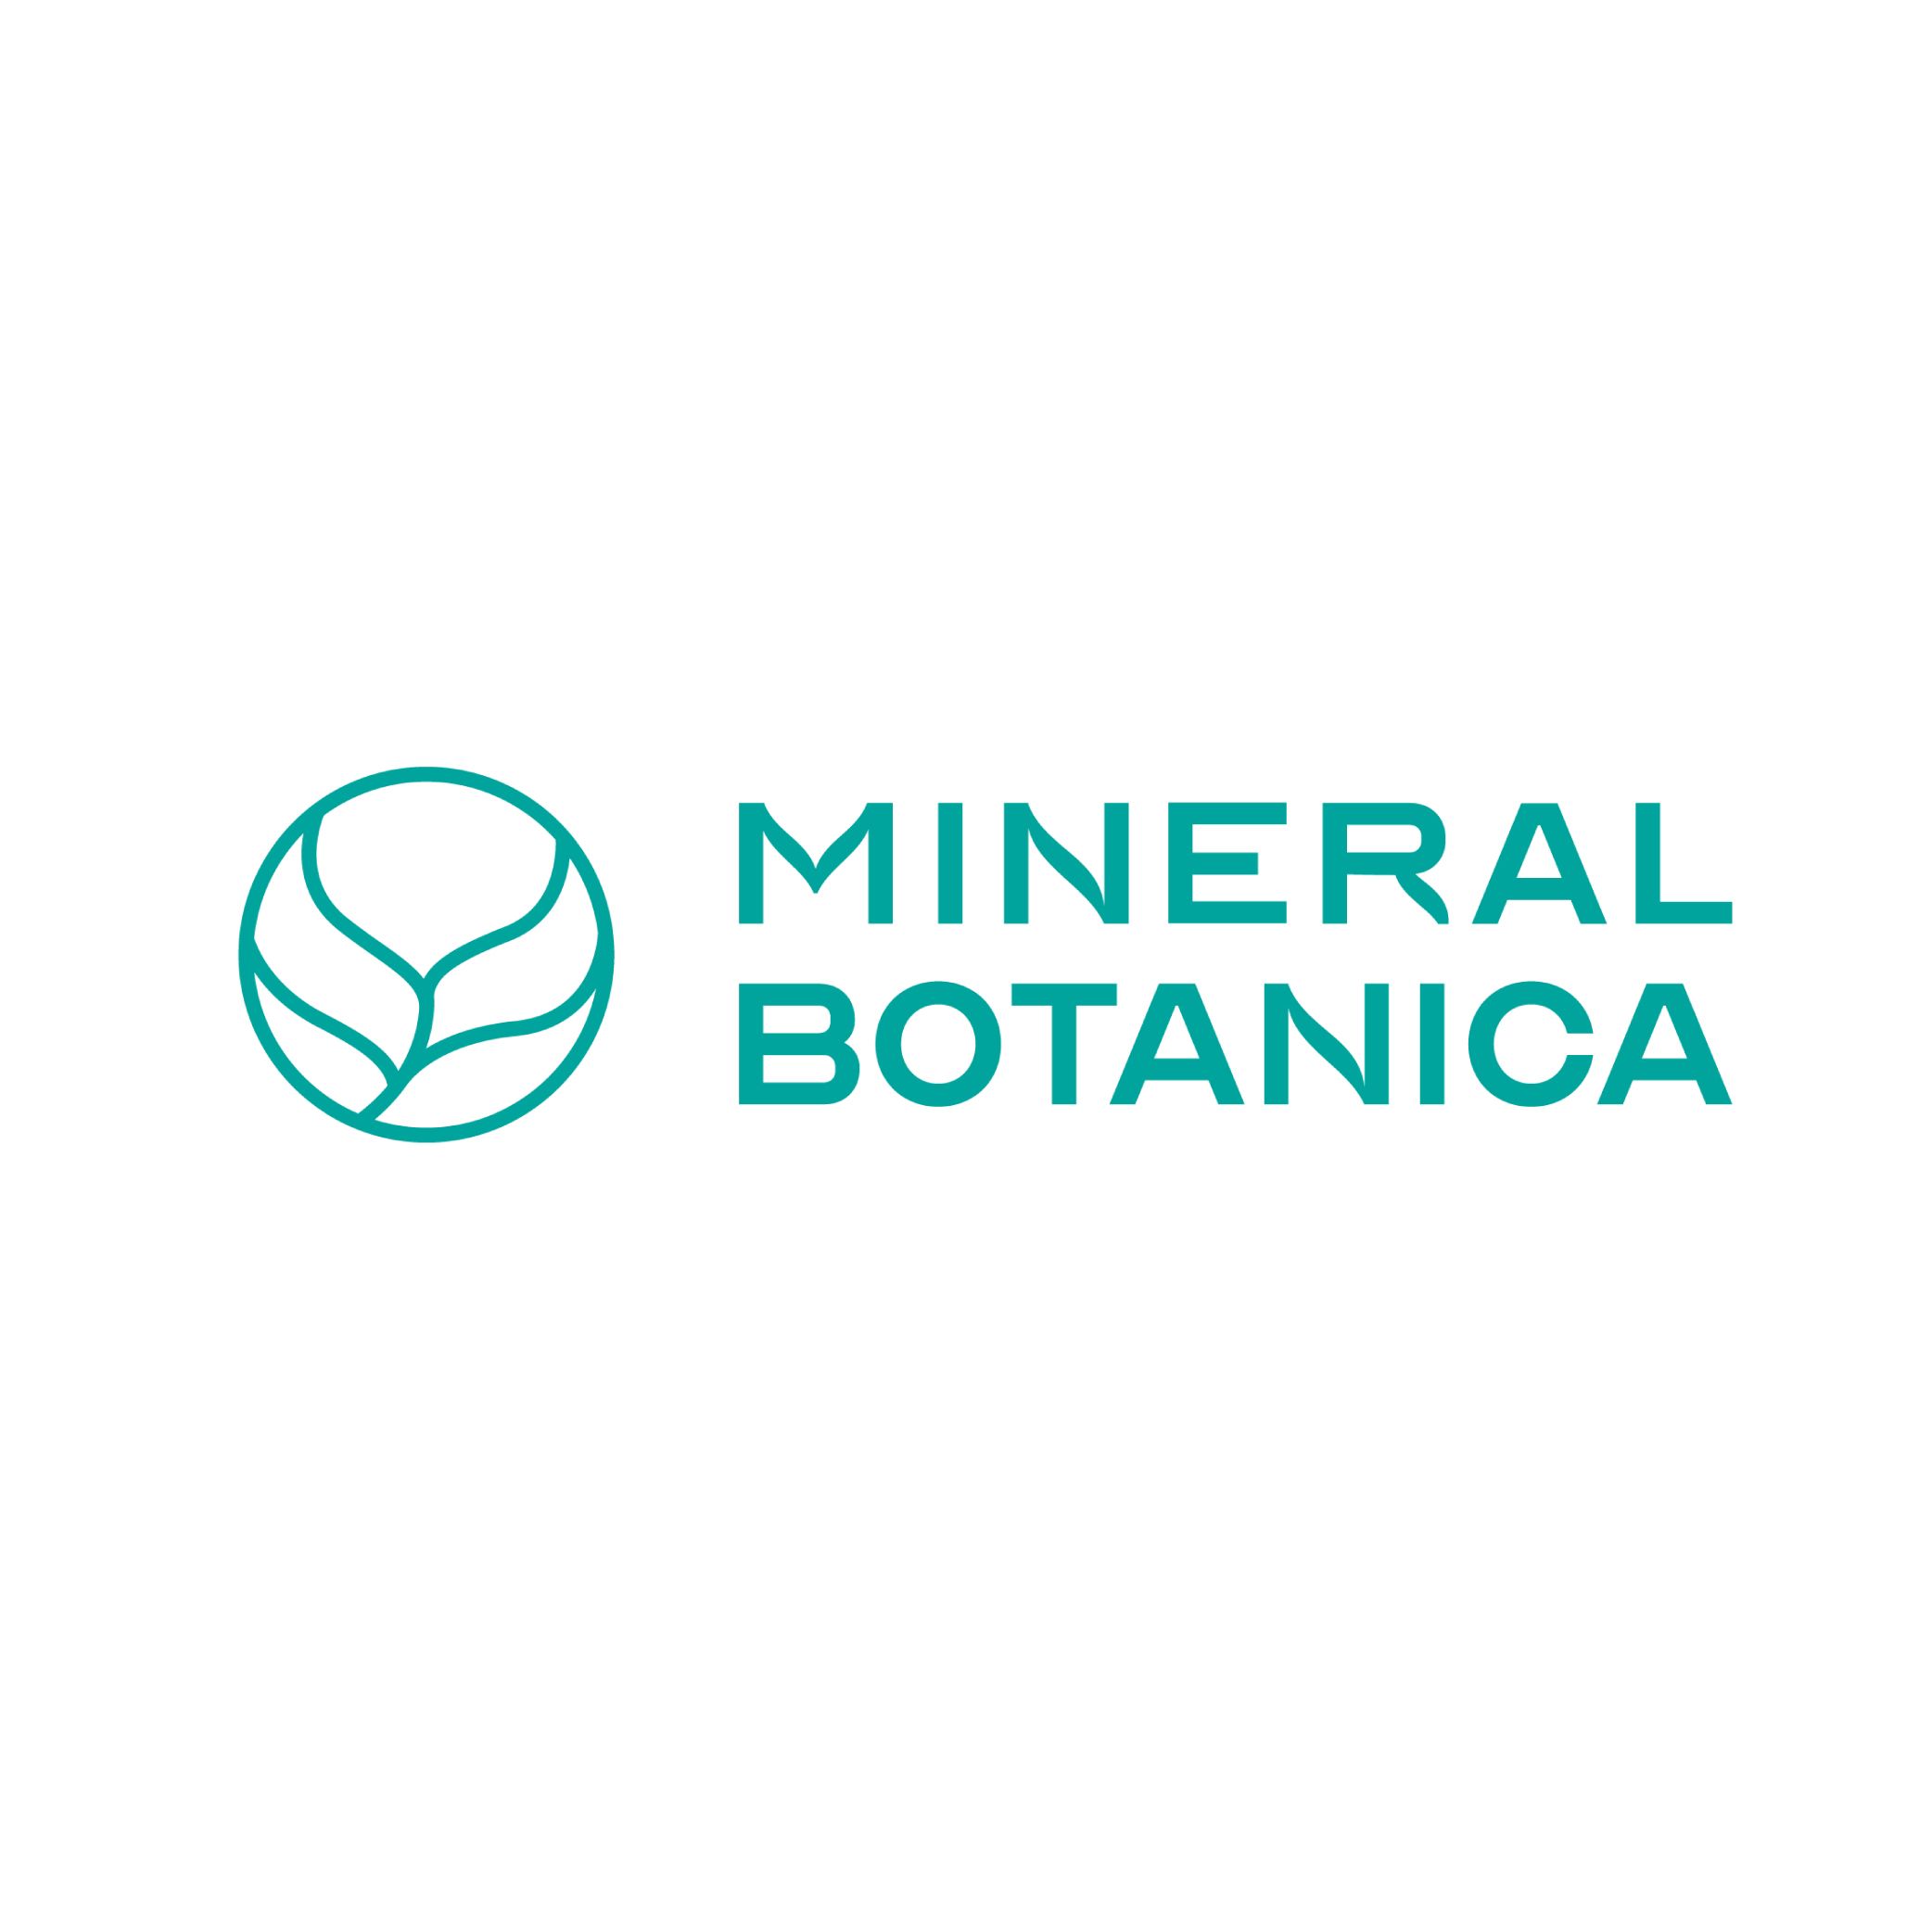 Mineral Botanica